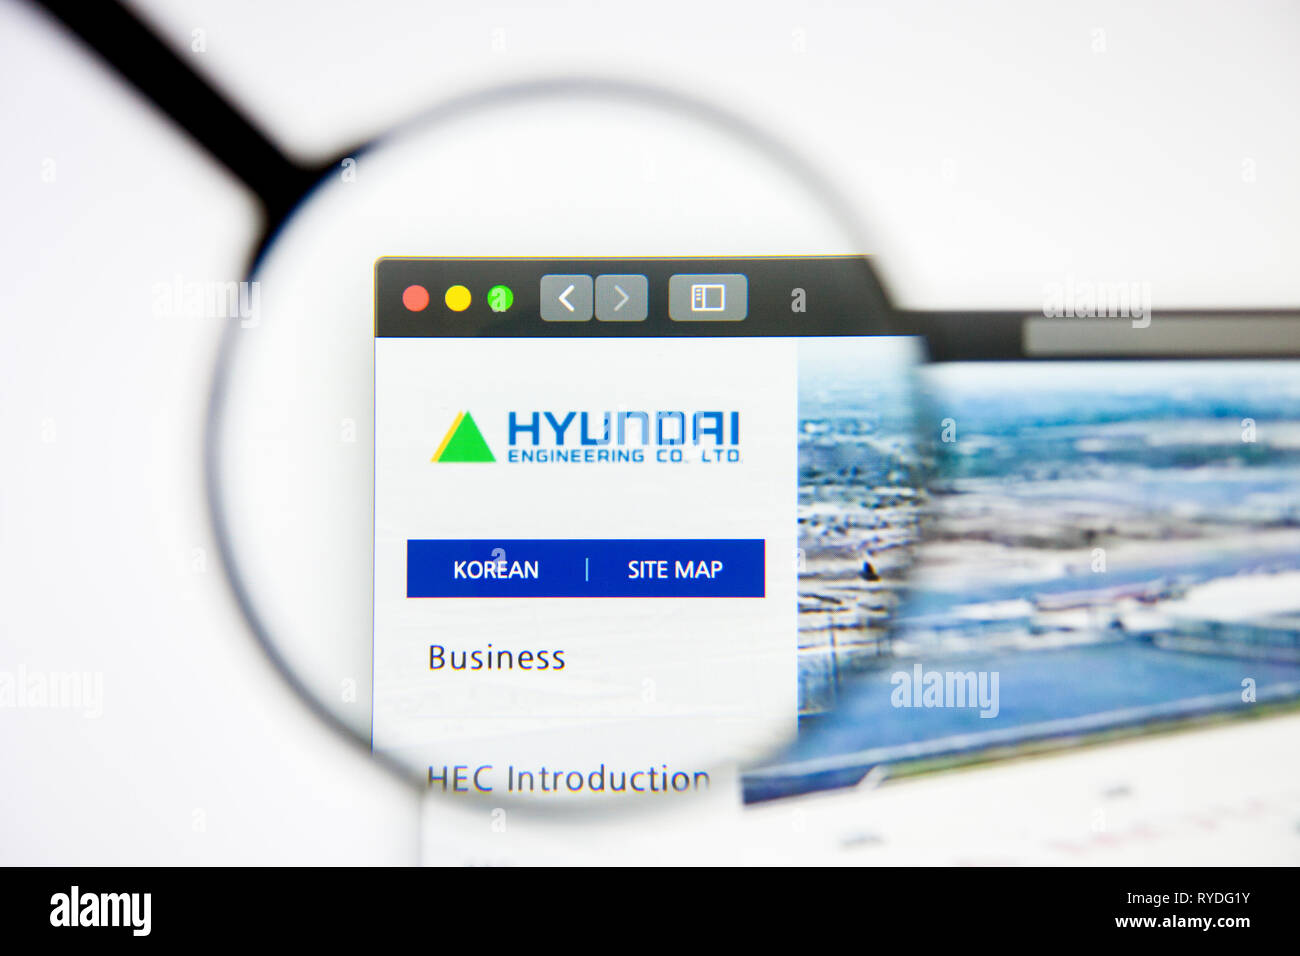 Los Angeles, Kalifornien, USA - 5. März 2019: Hyundai Engineering Website Homepage. Hyundai Engineering Logo sichtbar auf dem Display, Illustrative Stockfoto